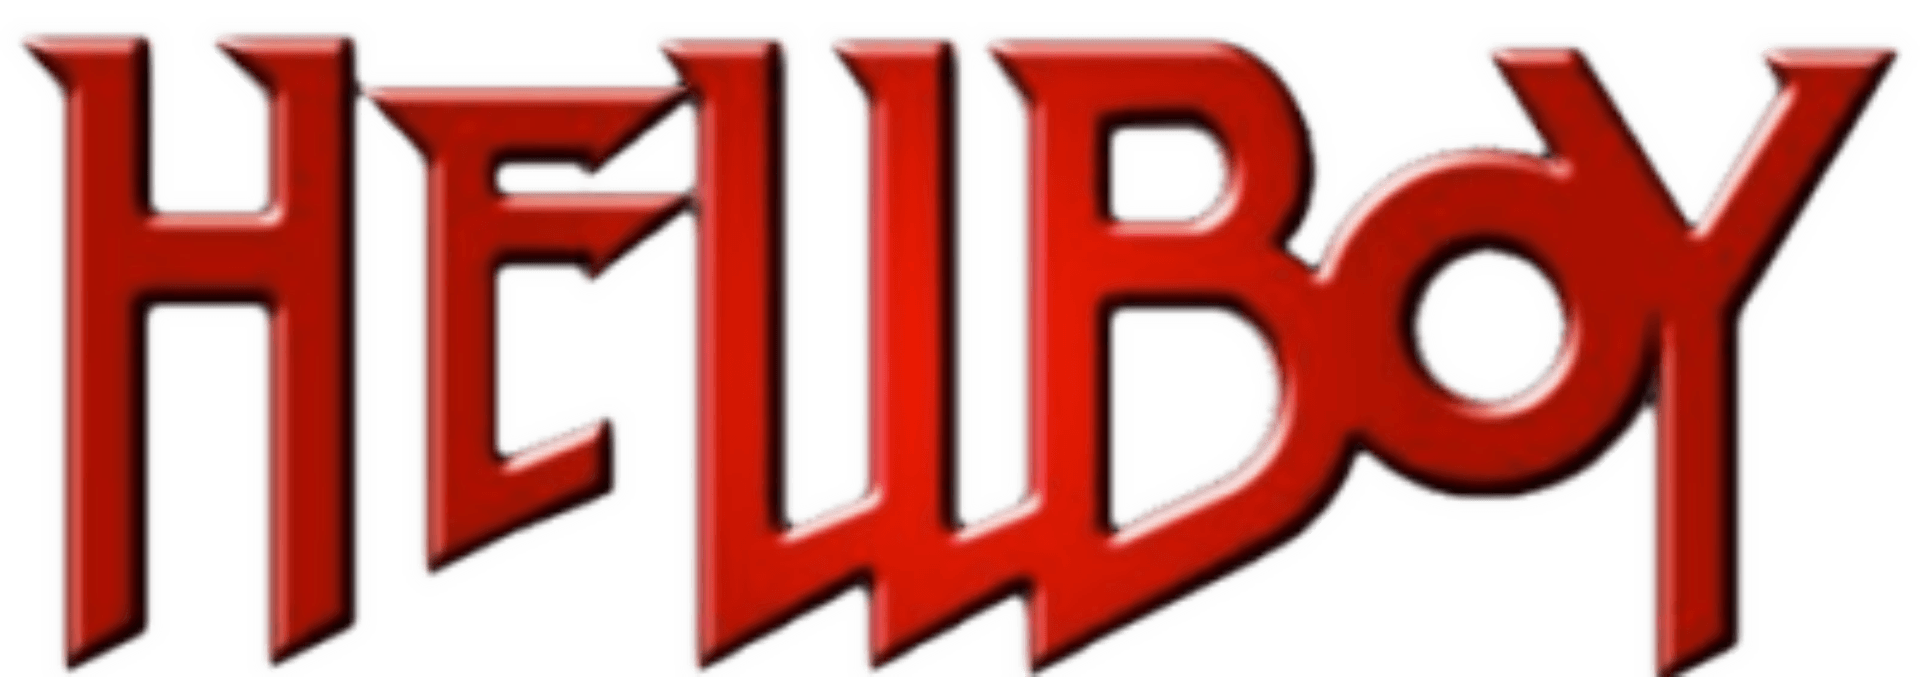 1920 Movie Logo - Plik:Hellboy movie logo.png – Wikipedia, wolna encyklopedia